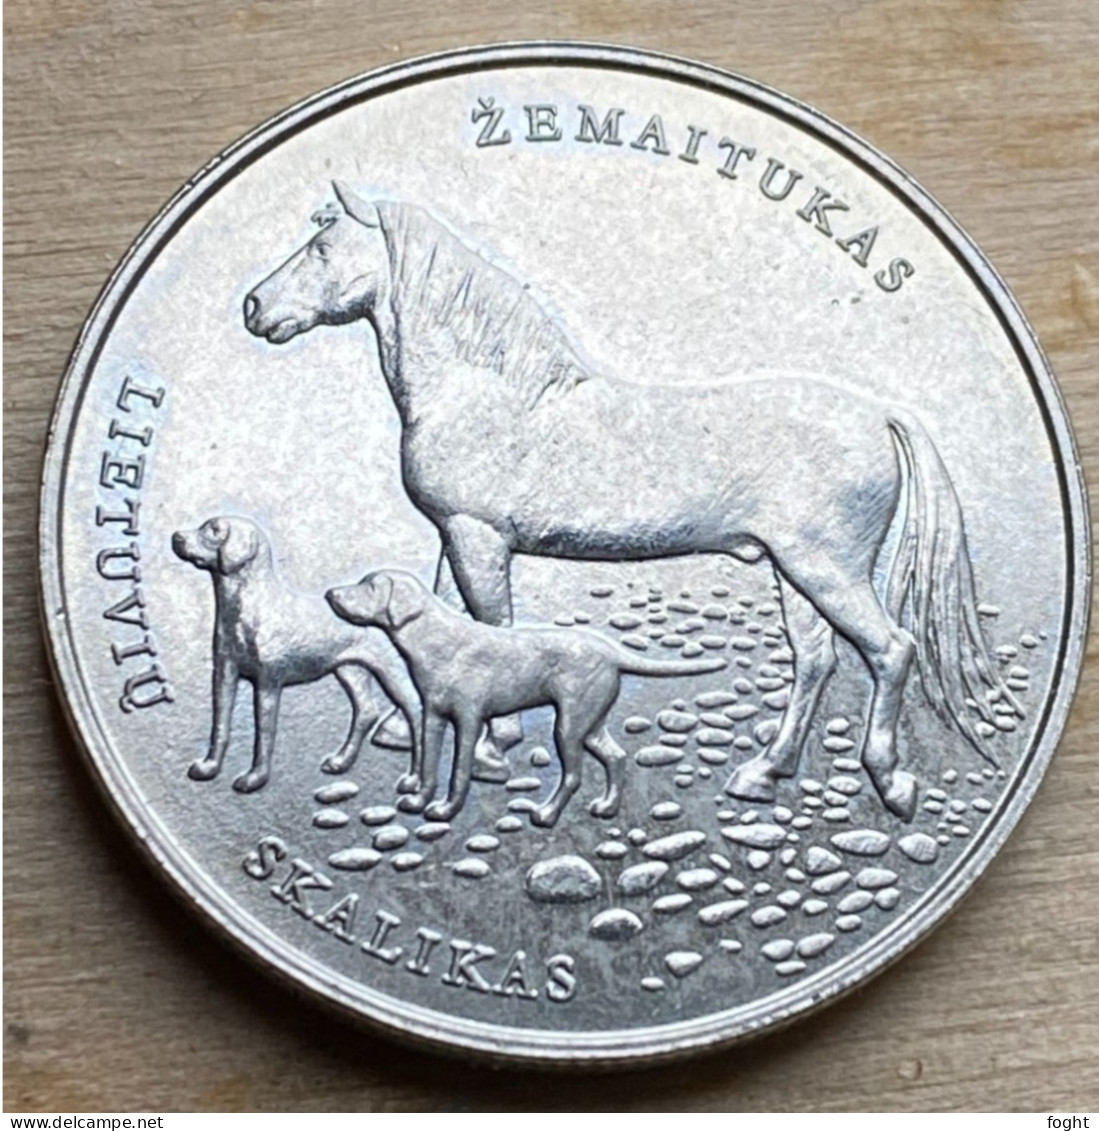 2017 LMK Lithuania "Lithuanian Hounds And Horse" 1.5 Euro Coin,KM#225,7121 - Lithuania